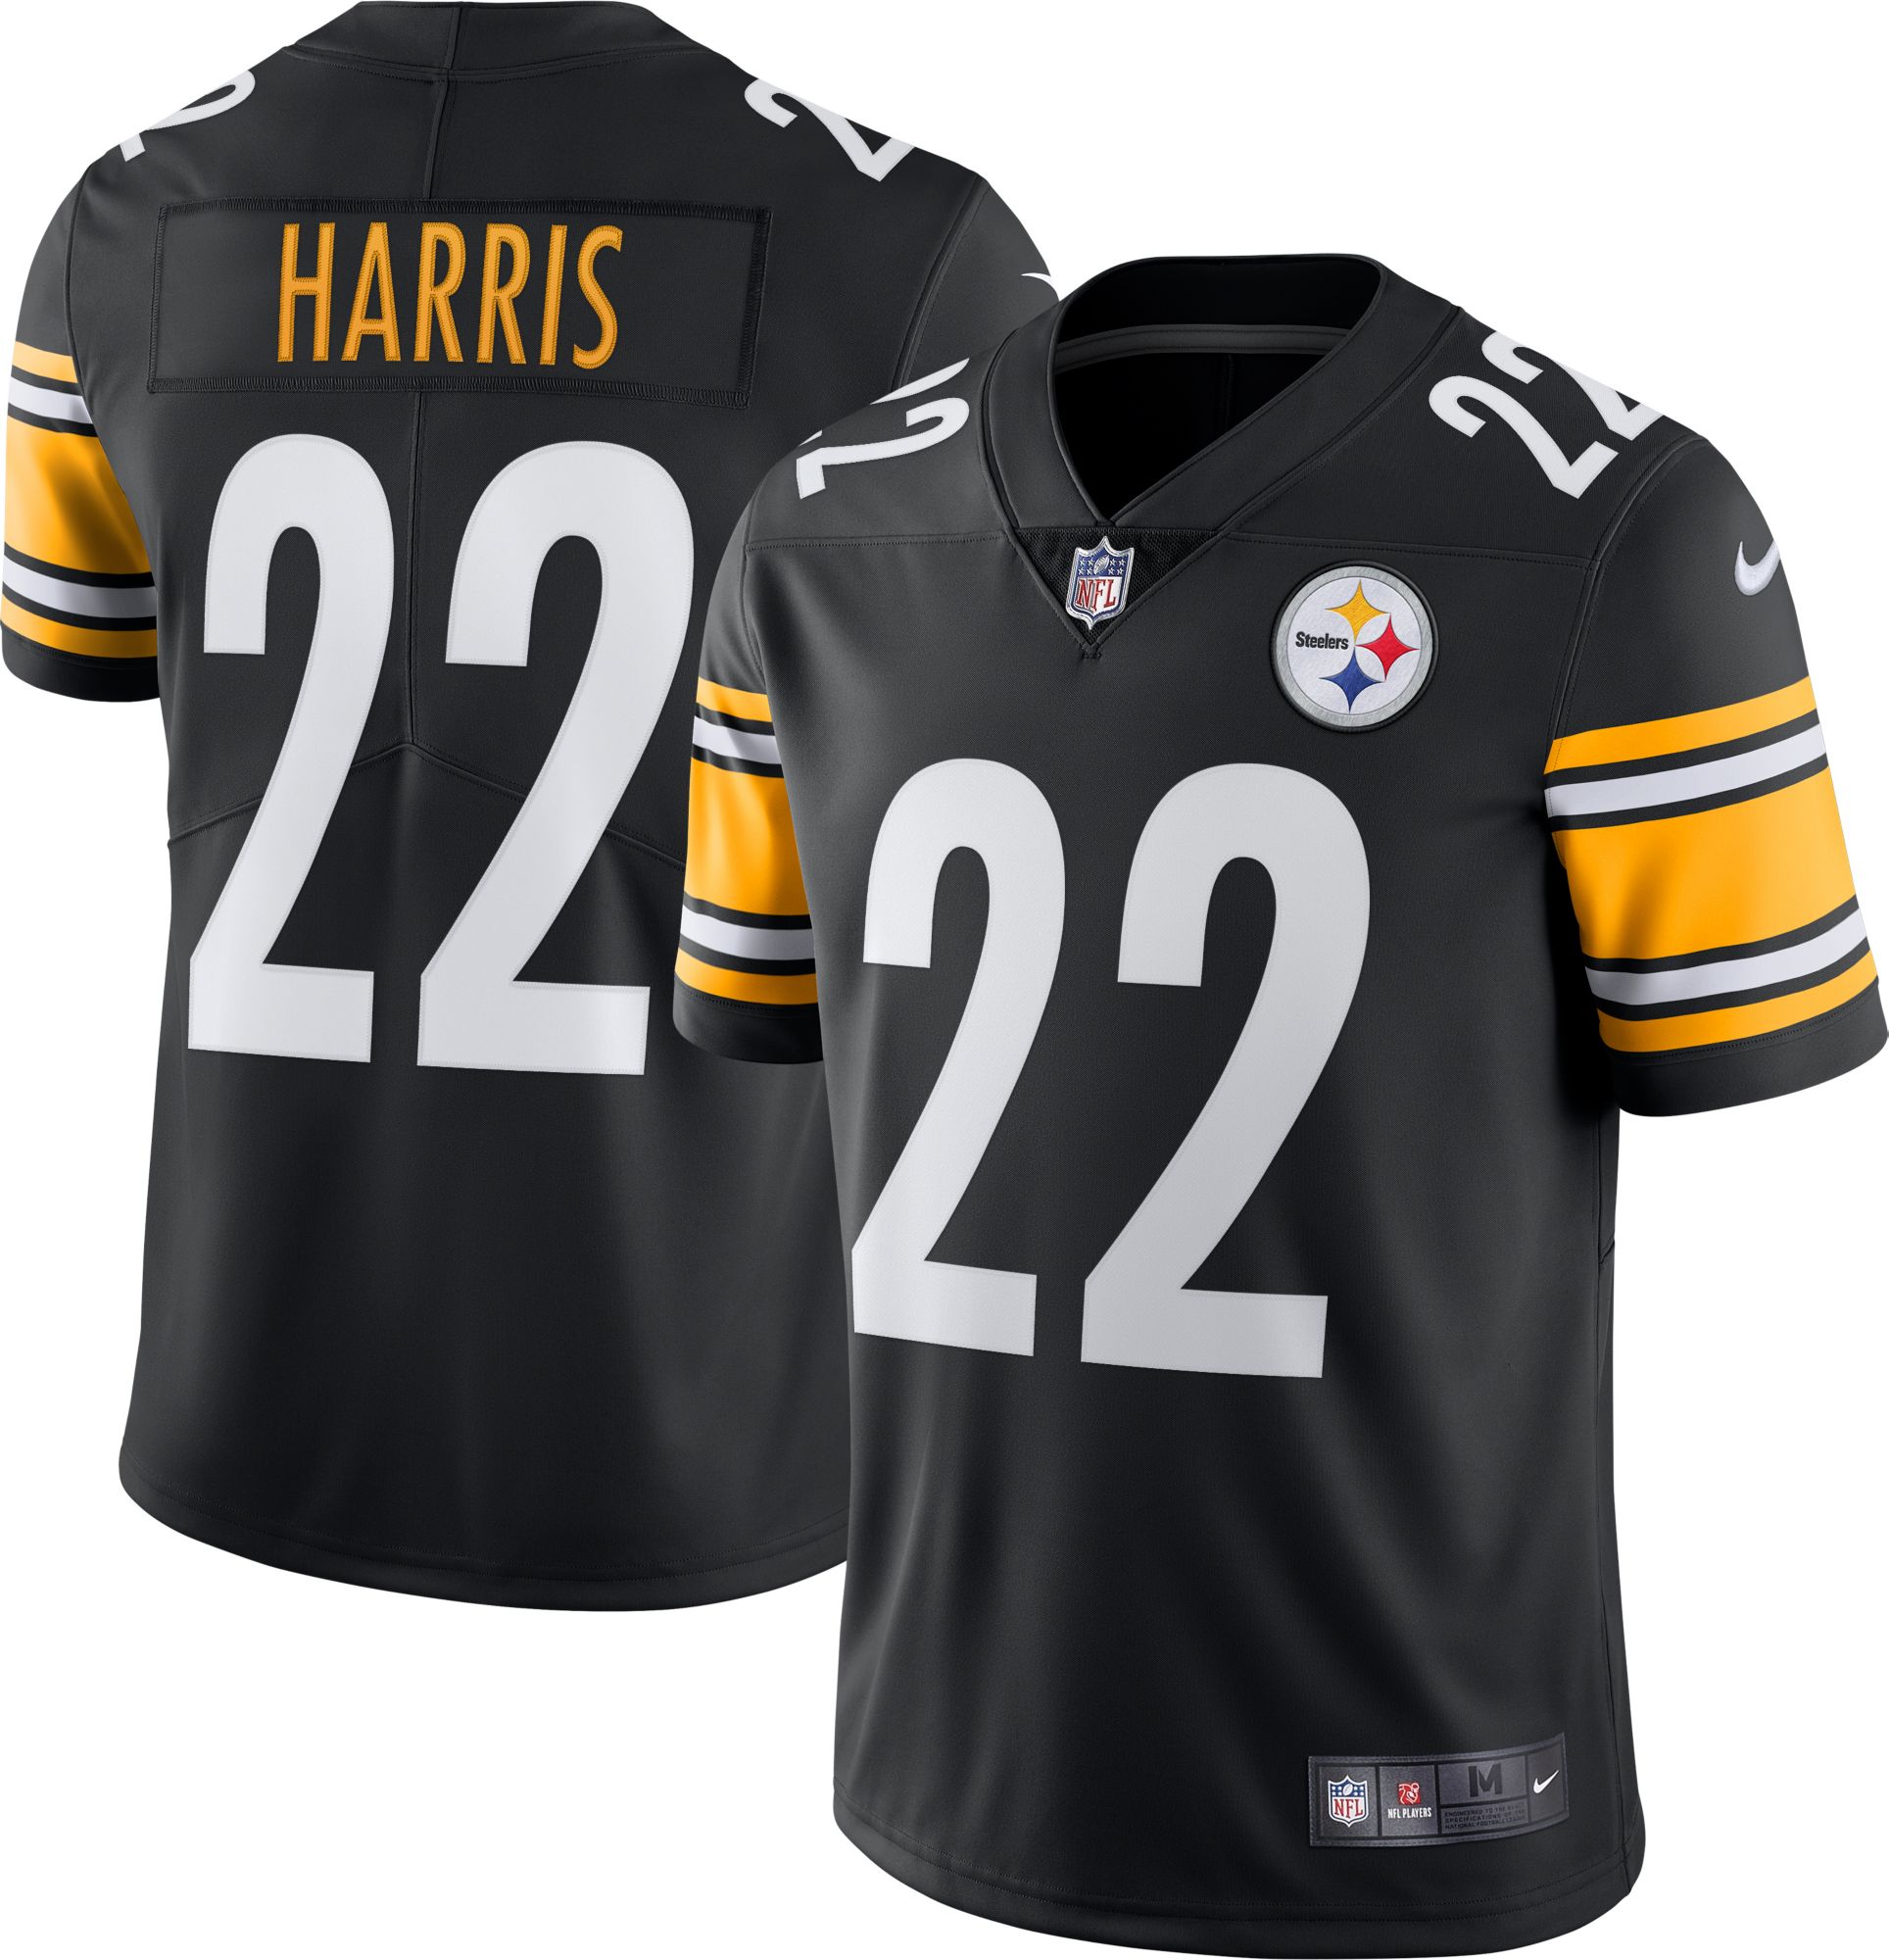 Nike / Men's Pittsburgh Steelers Najee Harris #22 Black Limited Jersey